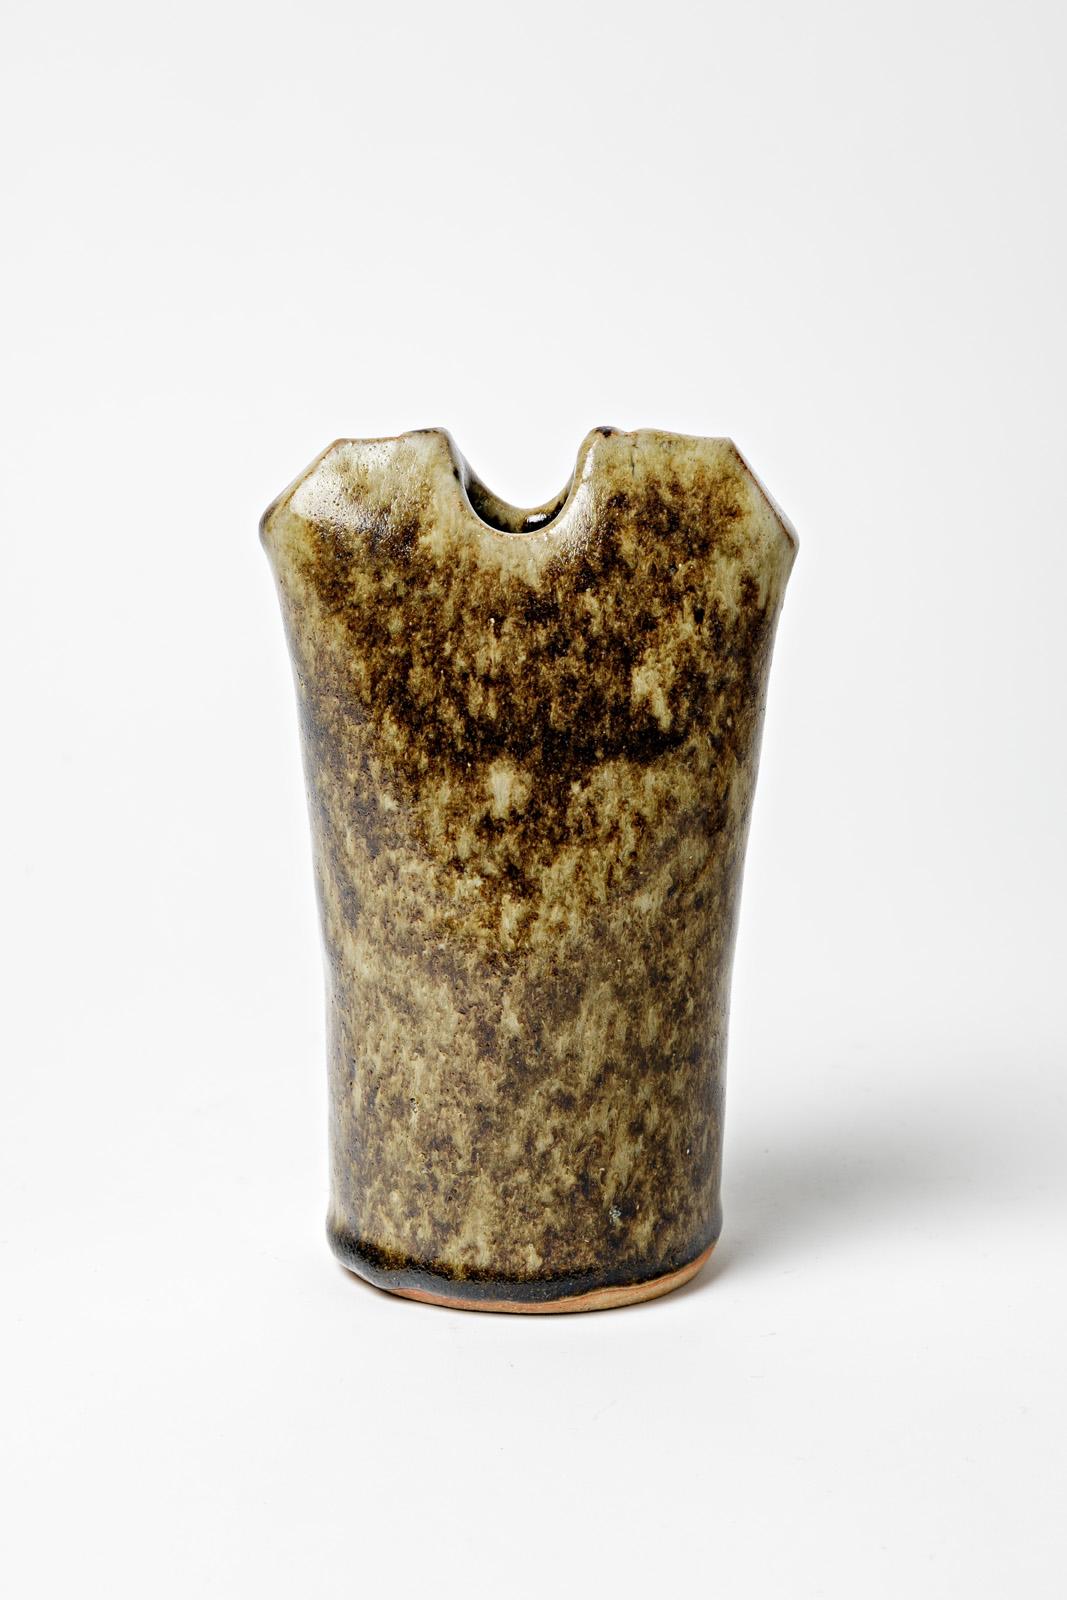 Robert Heraud 20th Century Design Ceramic Vase Sculpture La Borne, 1970 In Excellent Condition For Sale In Neuilly-en- sancerre, FR